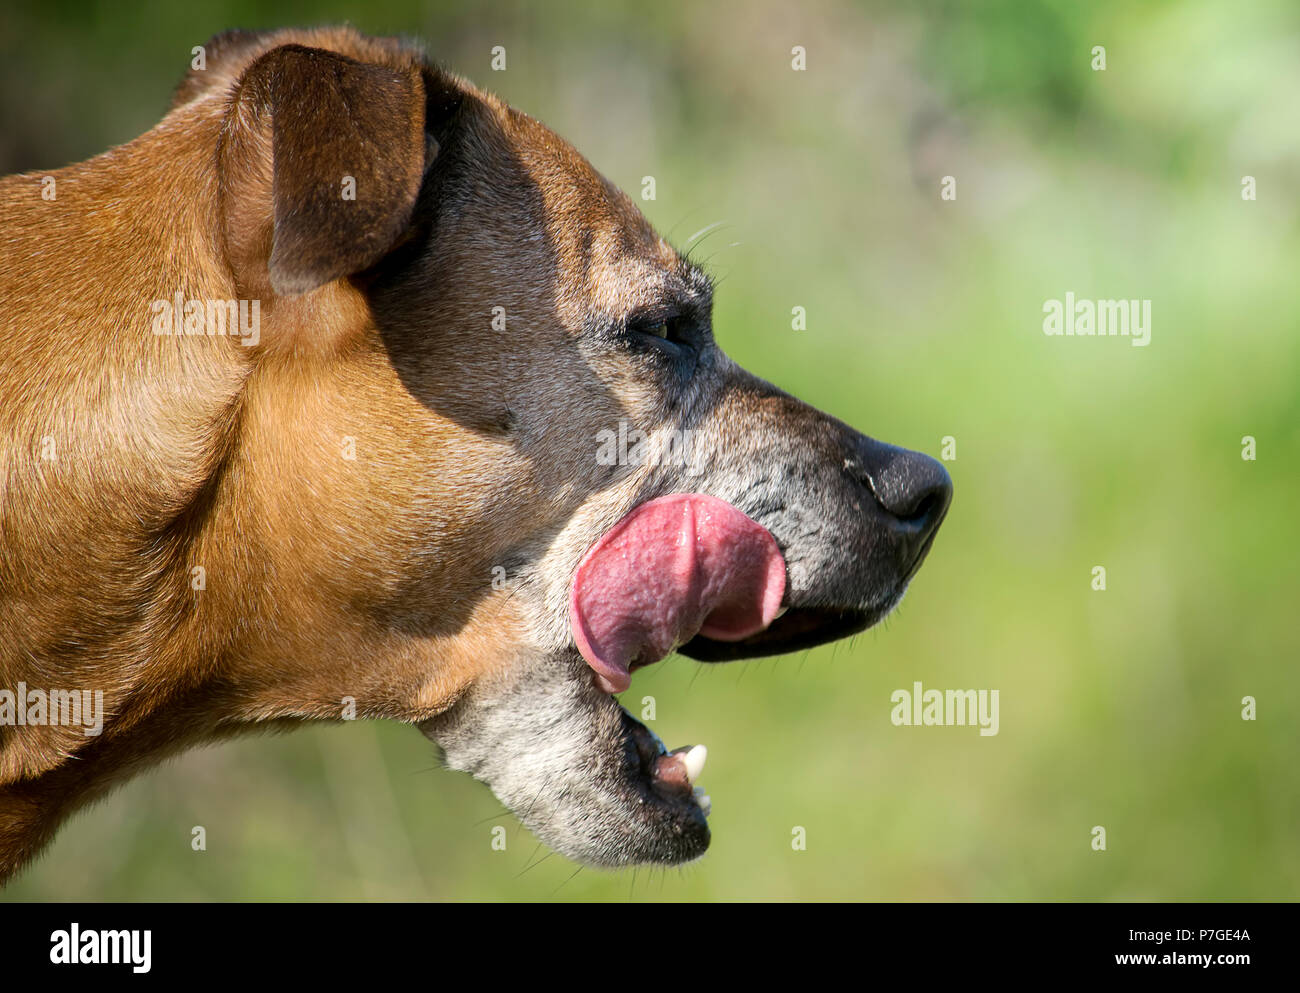 Profil de la tête d'un Staffordshire Bull Terrier avec sa langue dehors Banque D'Images